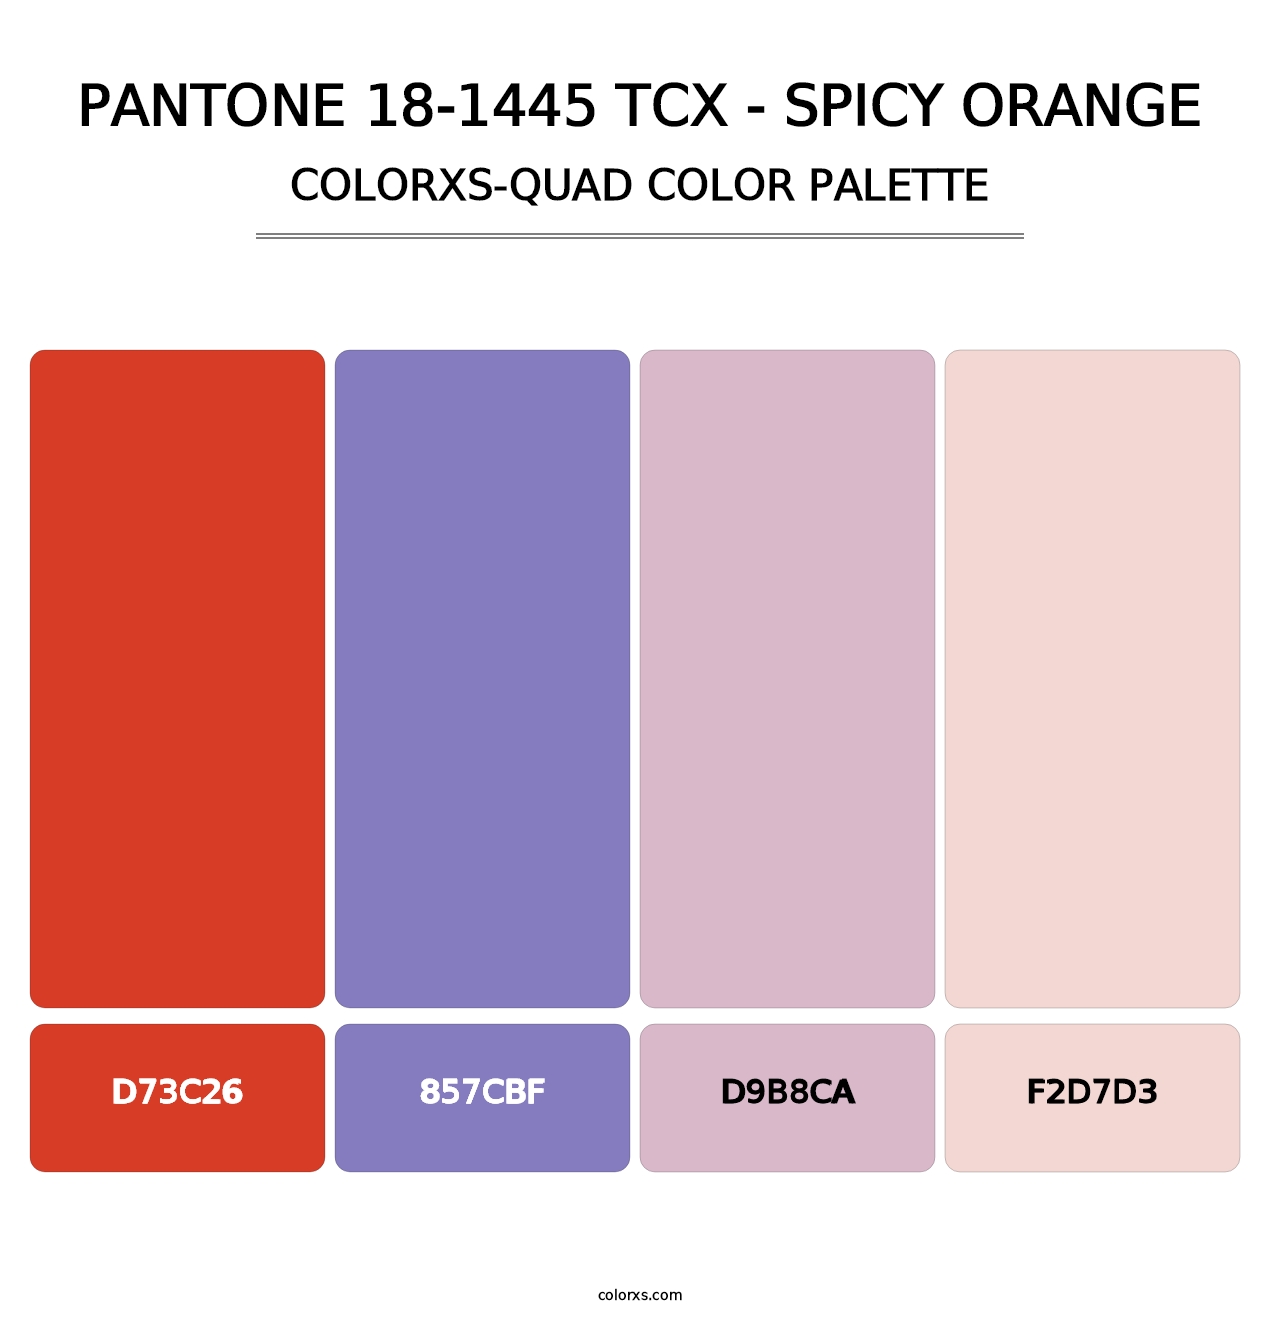 PANTONE 18-1445 TCX - Spicy Orange - Colorxs Quad Palette